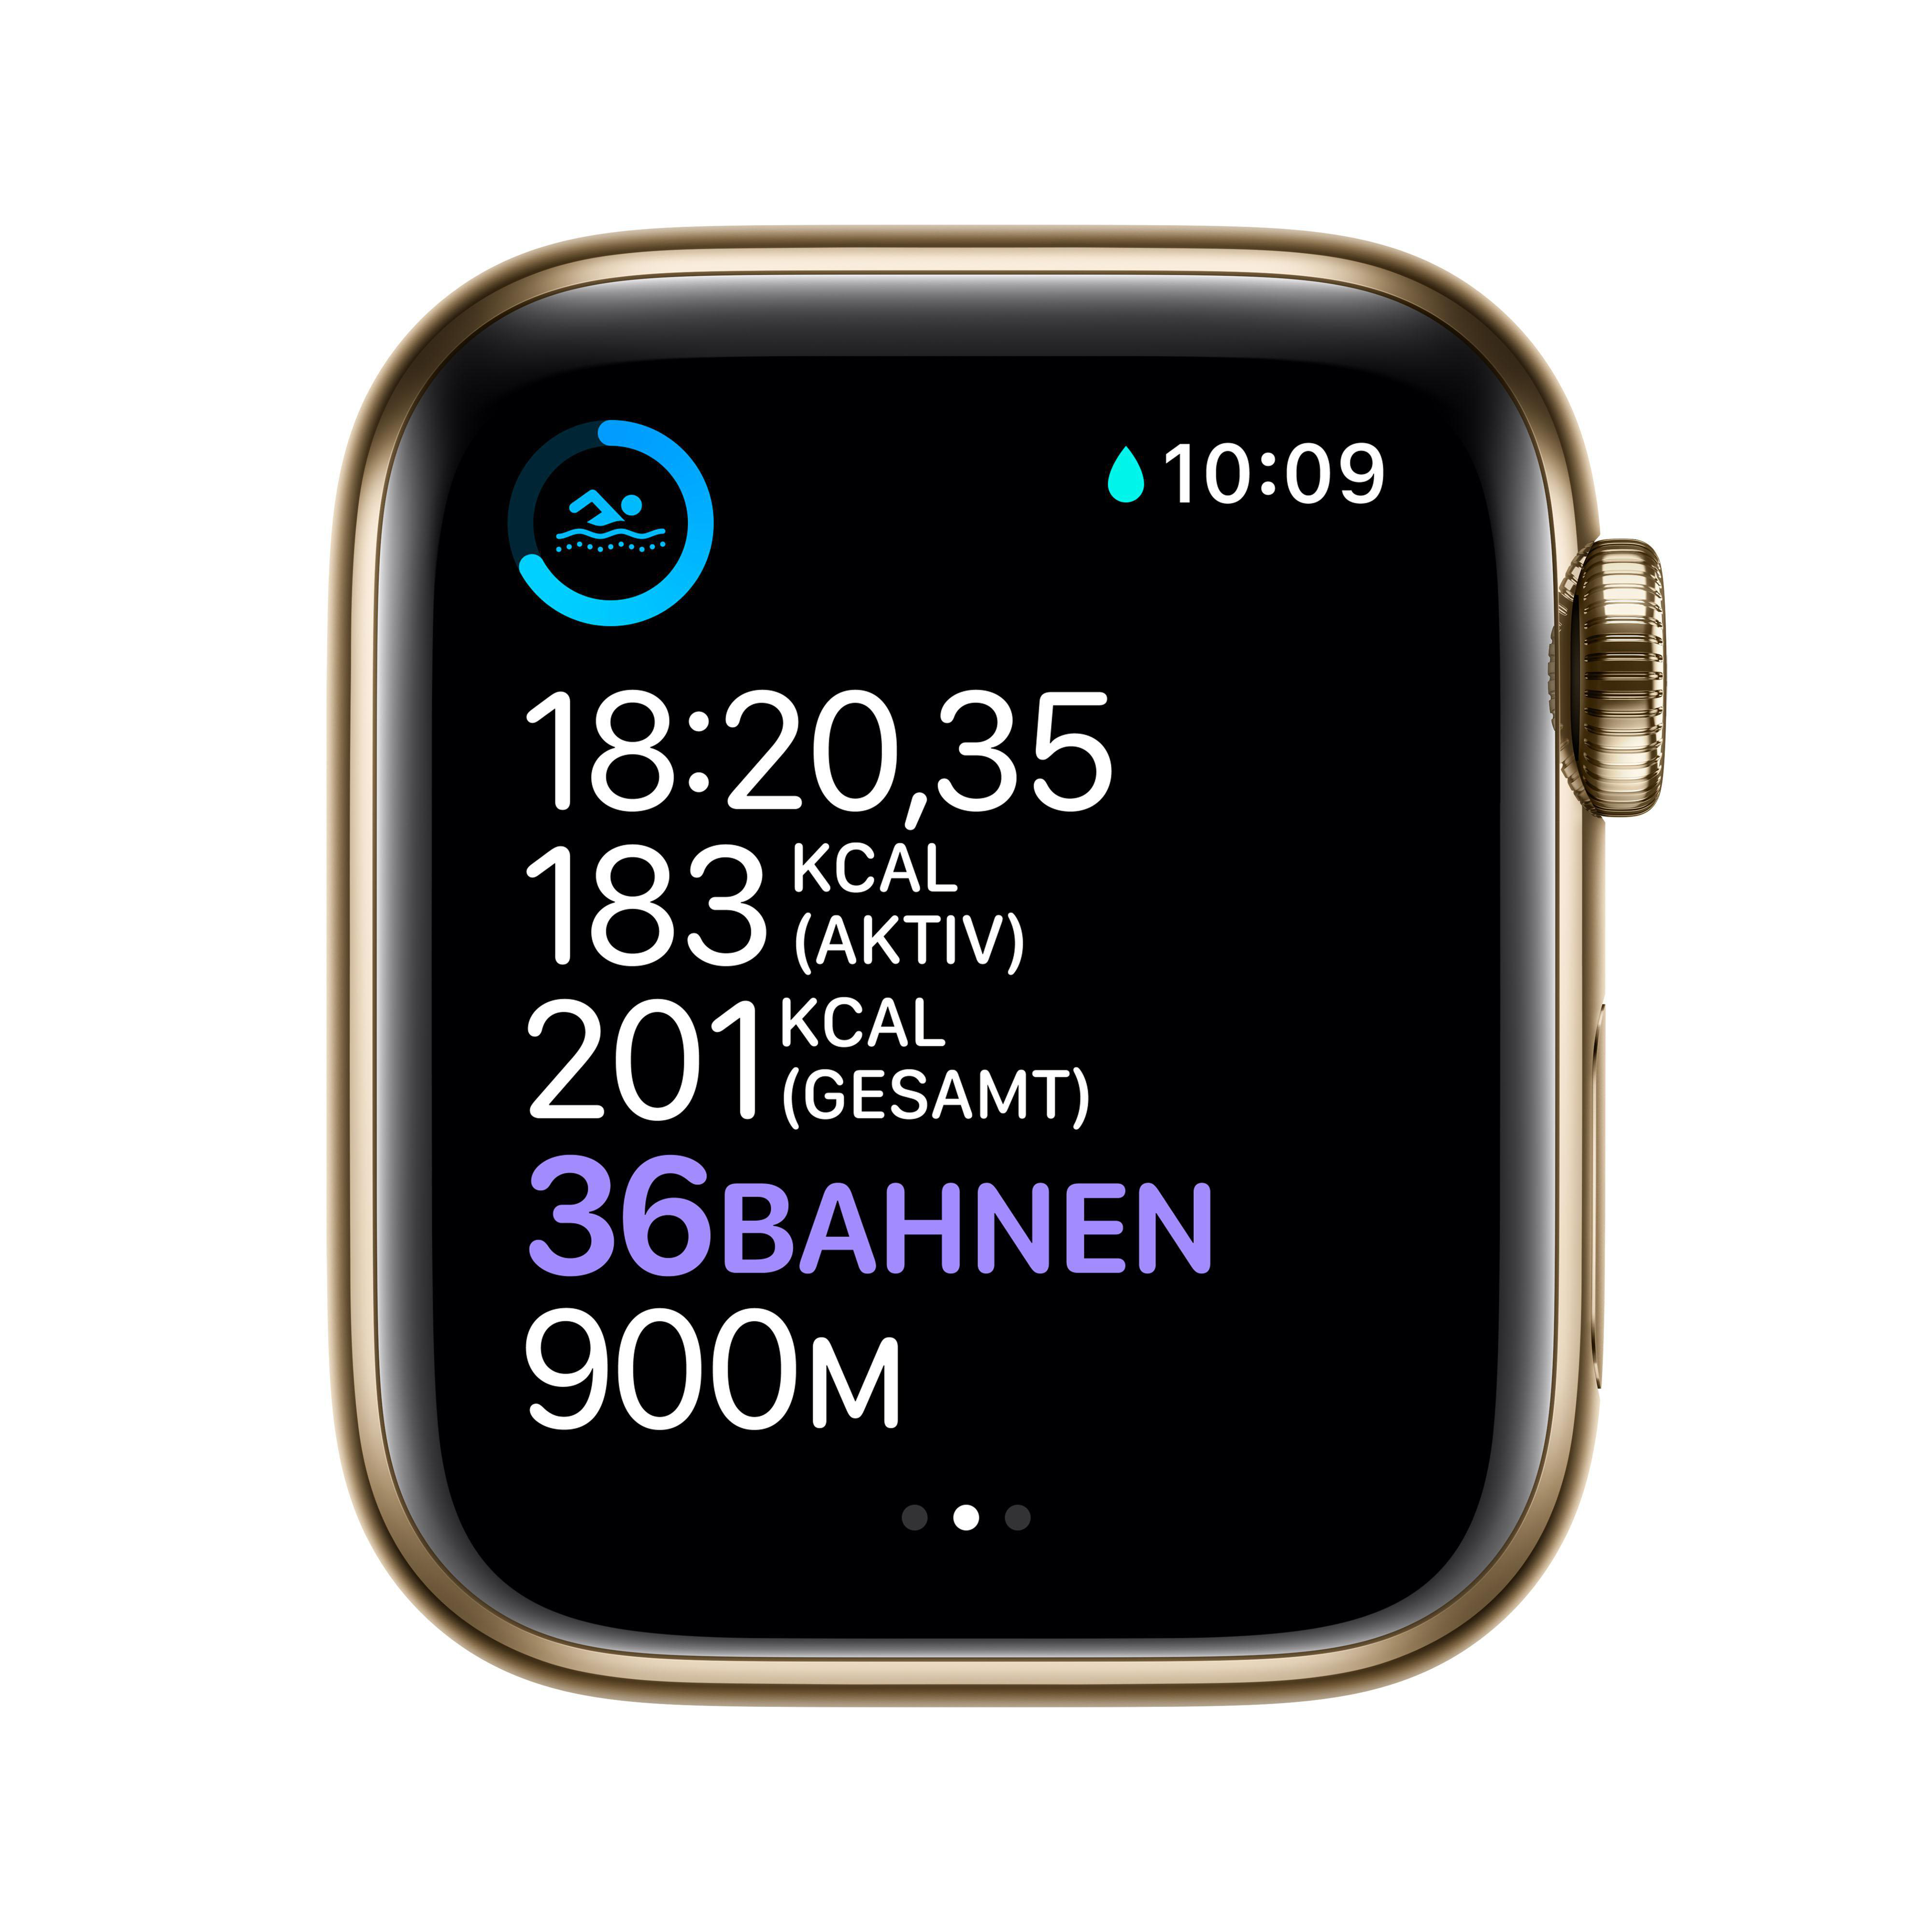 Series 180 Cellular) + 40mm Gold - 6 mm, APPLE Gehäuse: Watch Armband: 130 (GPS Gold, Edelstahl Edelstahl, Smartwatch